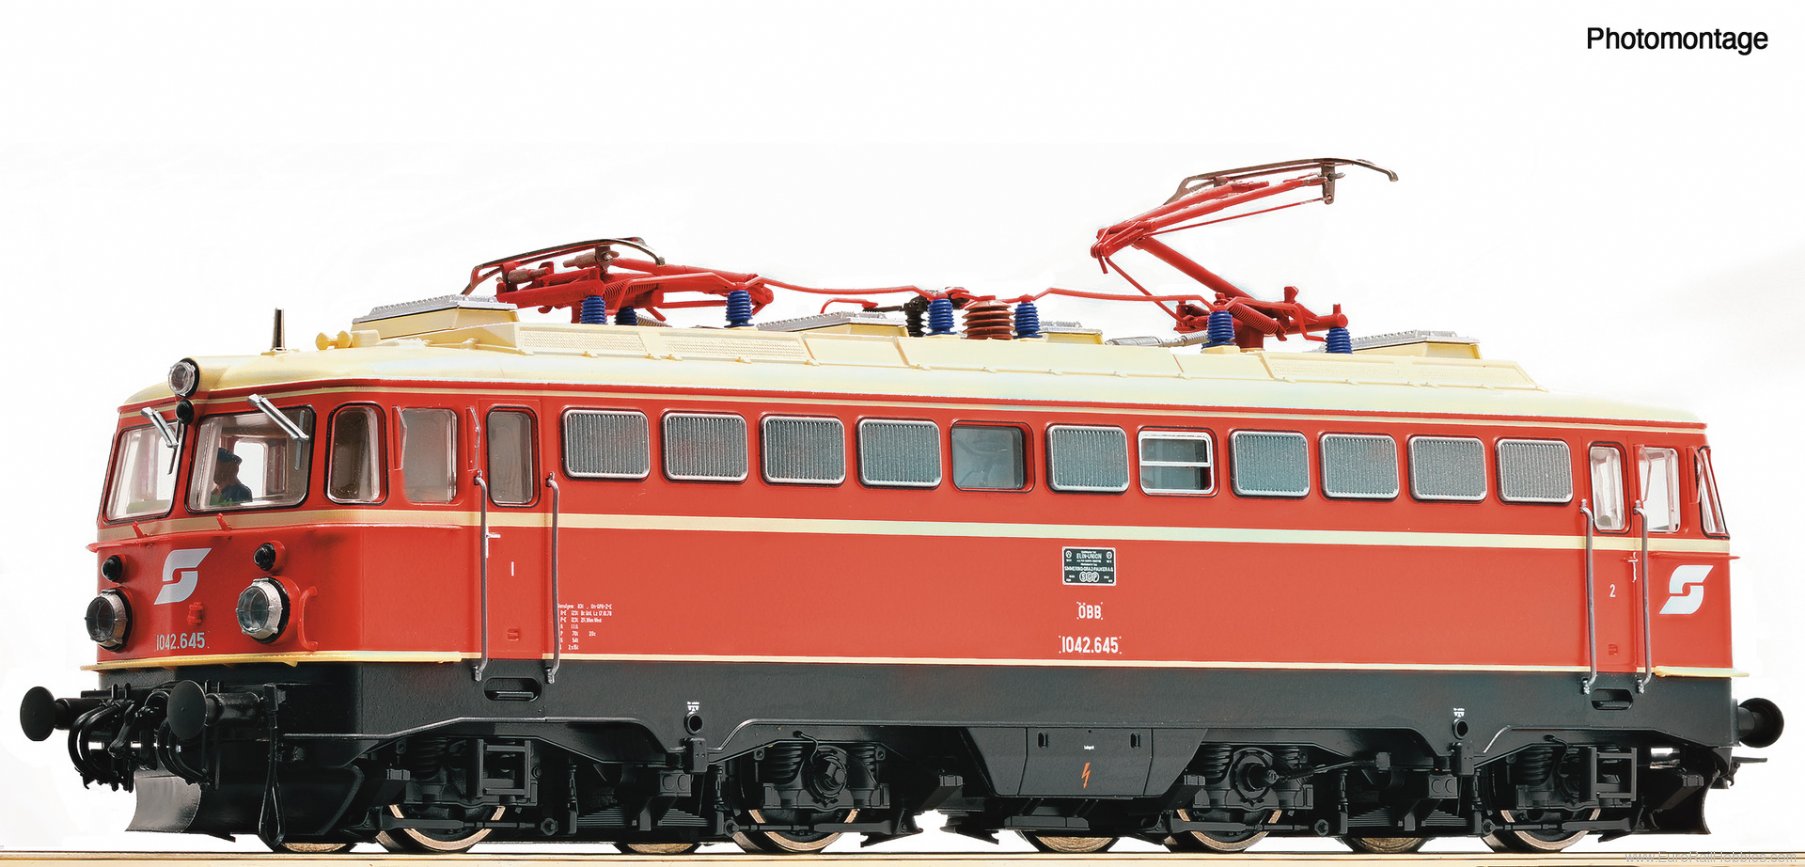 Roco 7510023 Electric locomotive 1042.645, ÃBB (DCC Sou